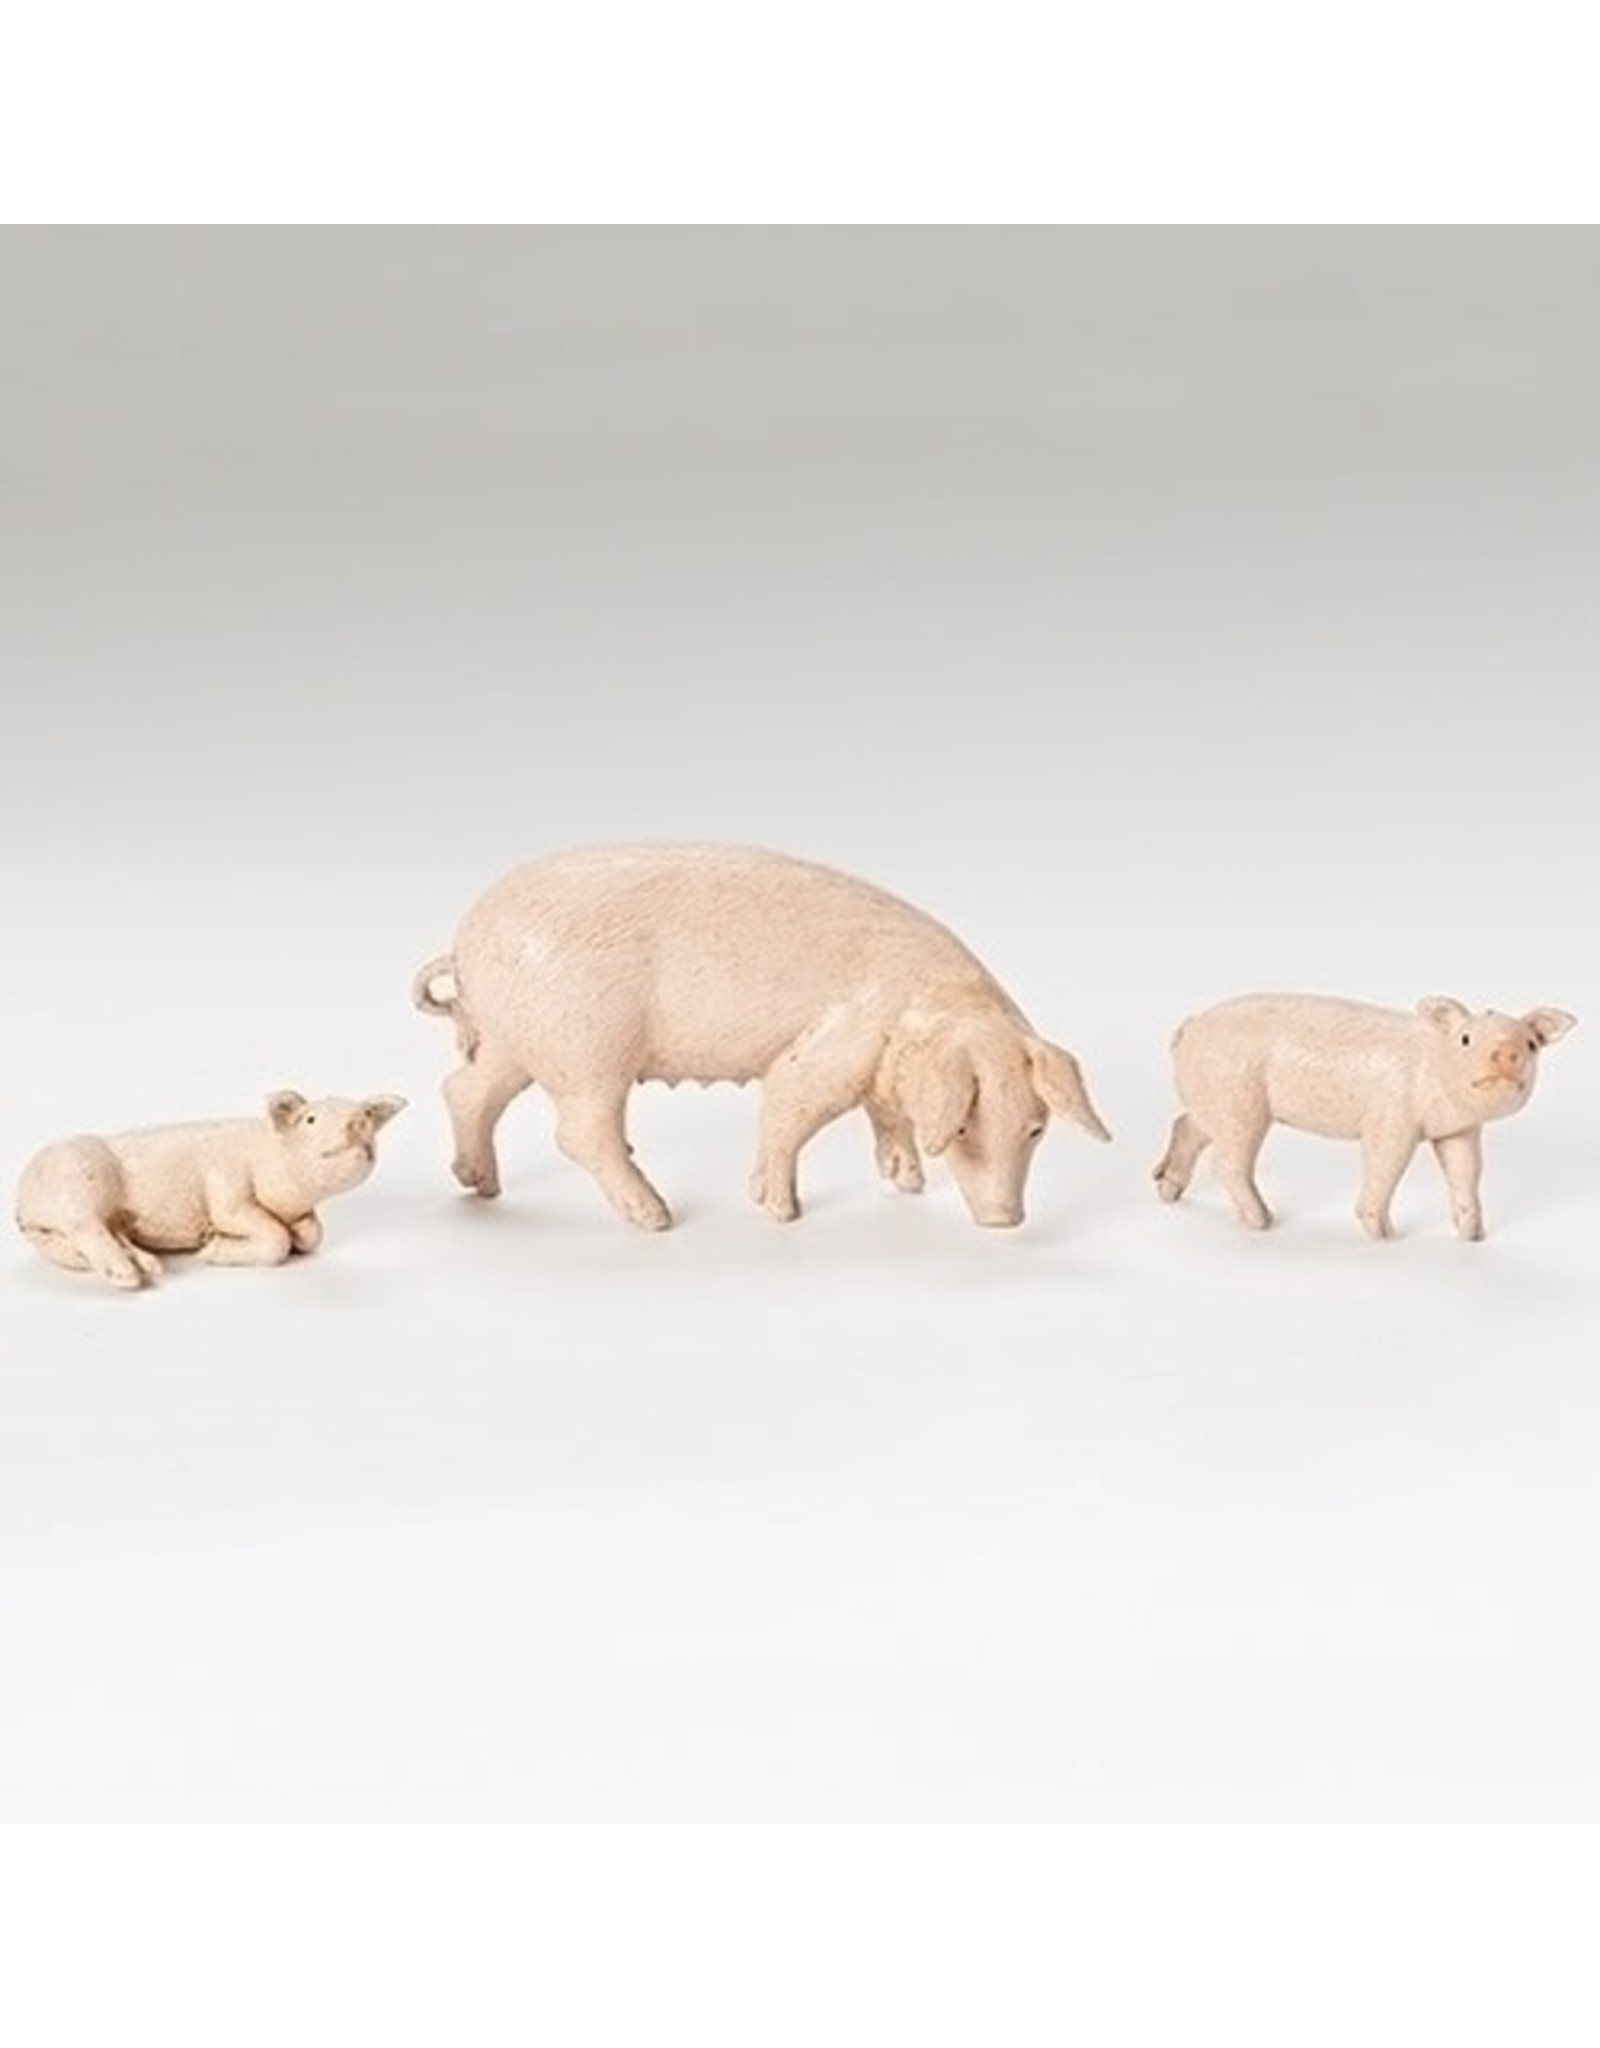 Fontanini - Pigs Nativity Figures, 3pc Set (5" Scale)